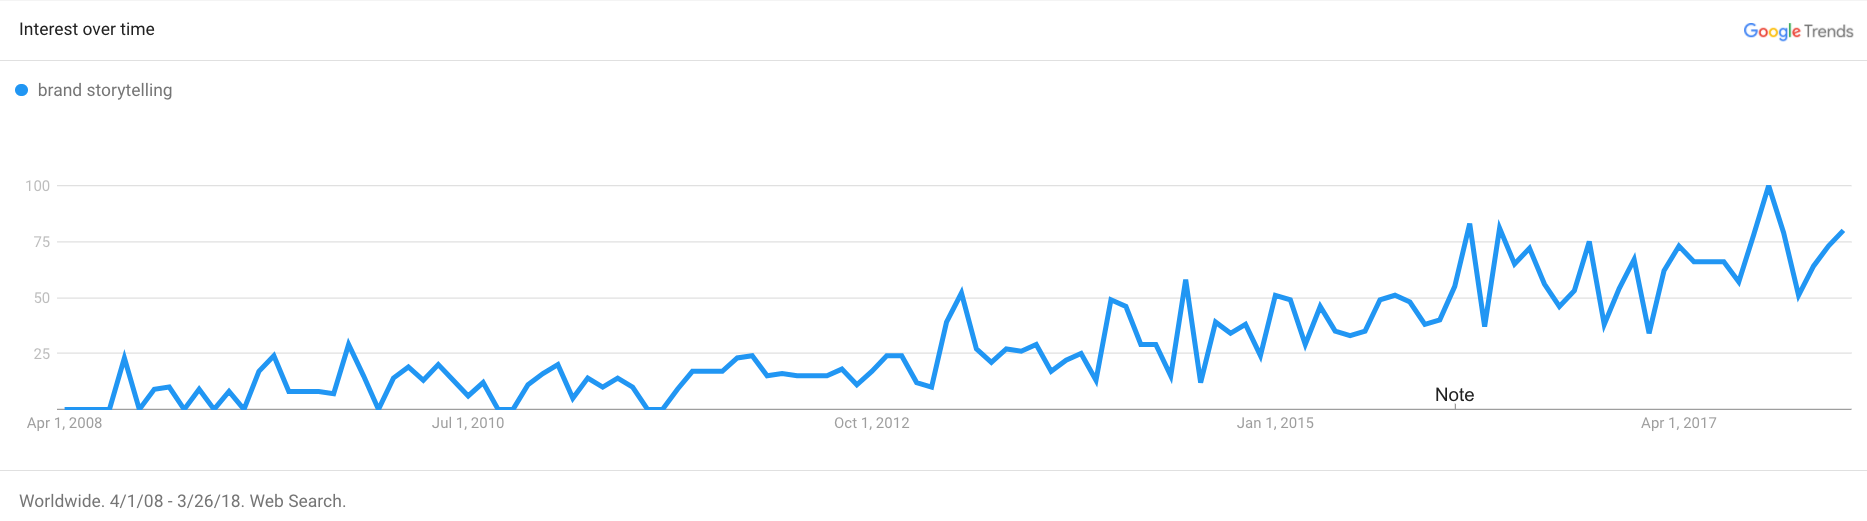 brand storytelling on Google Trends